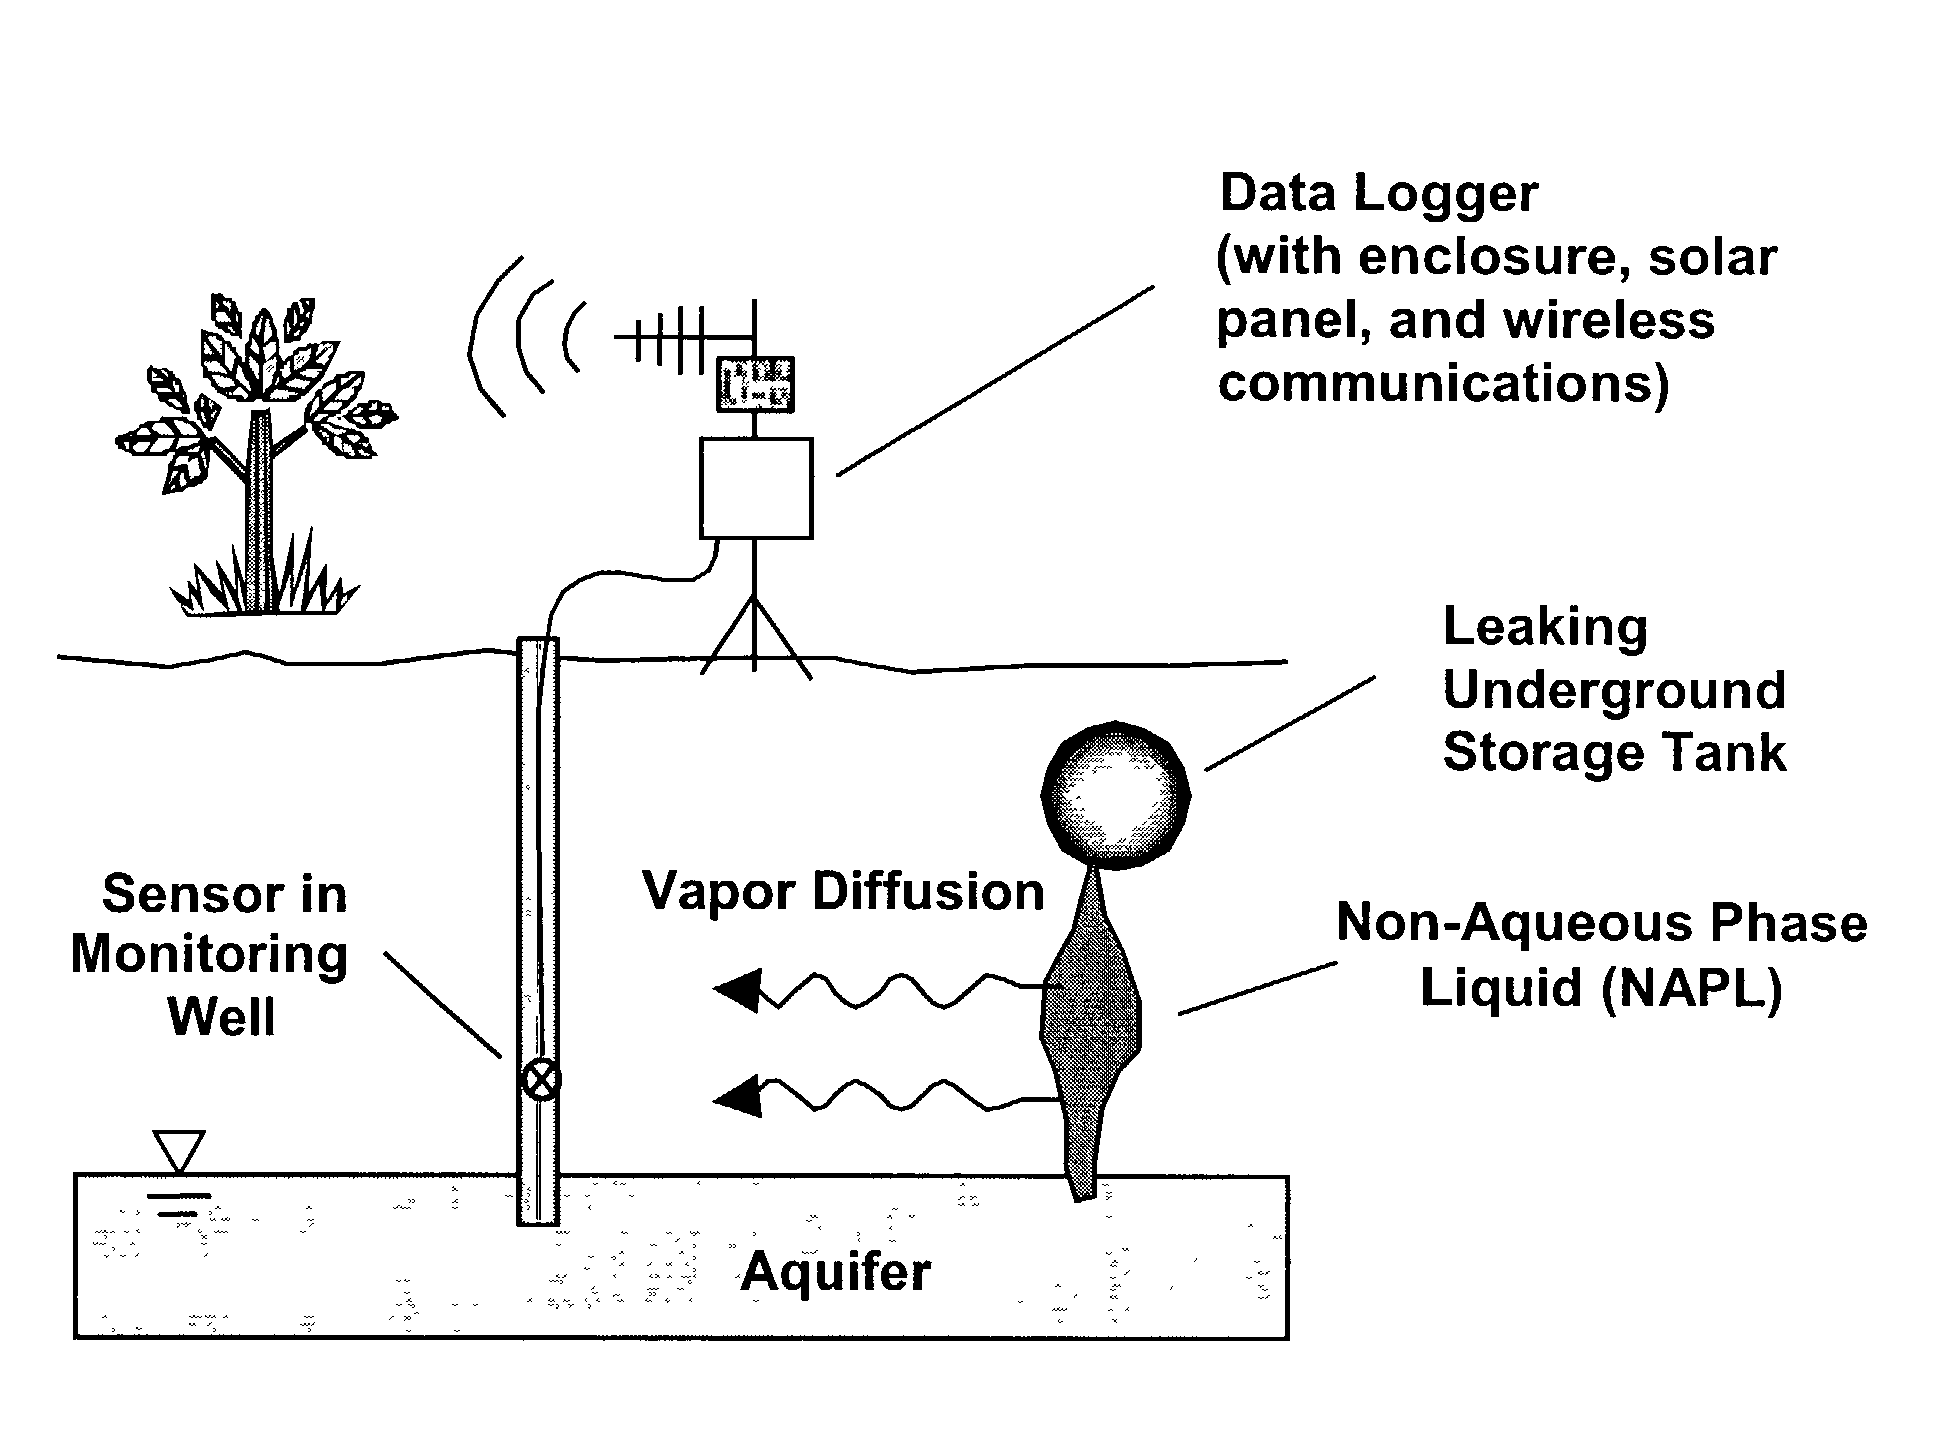 Methods for characterizing subsurface volatile contaminants using in-situ sensors